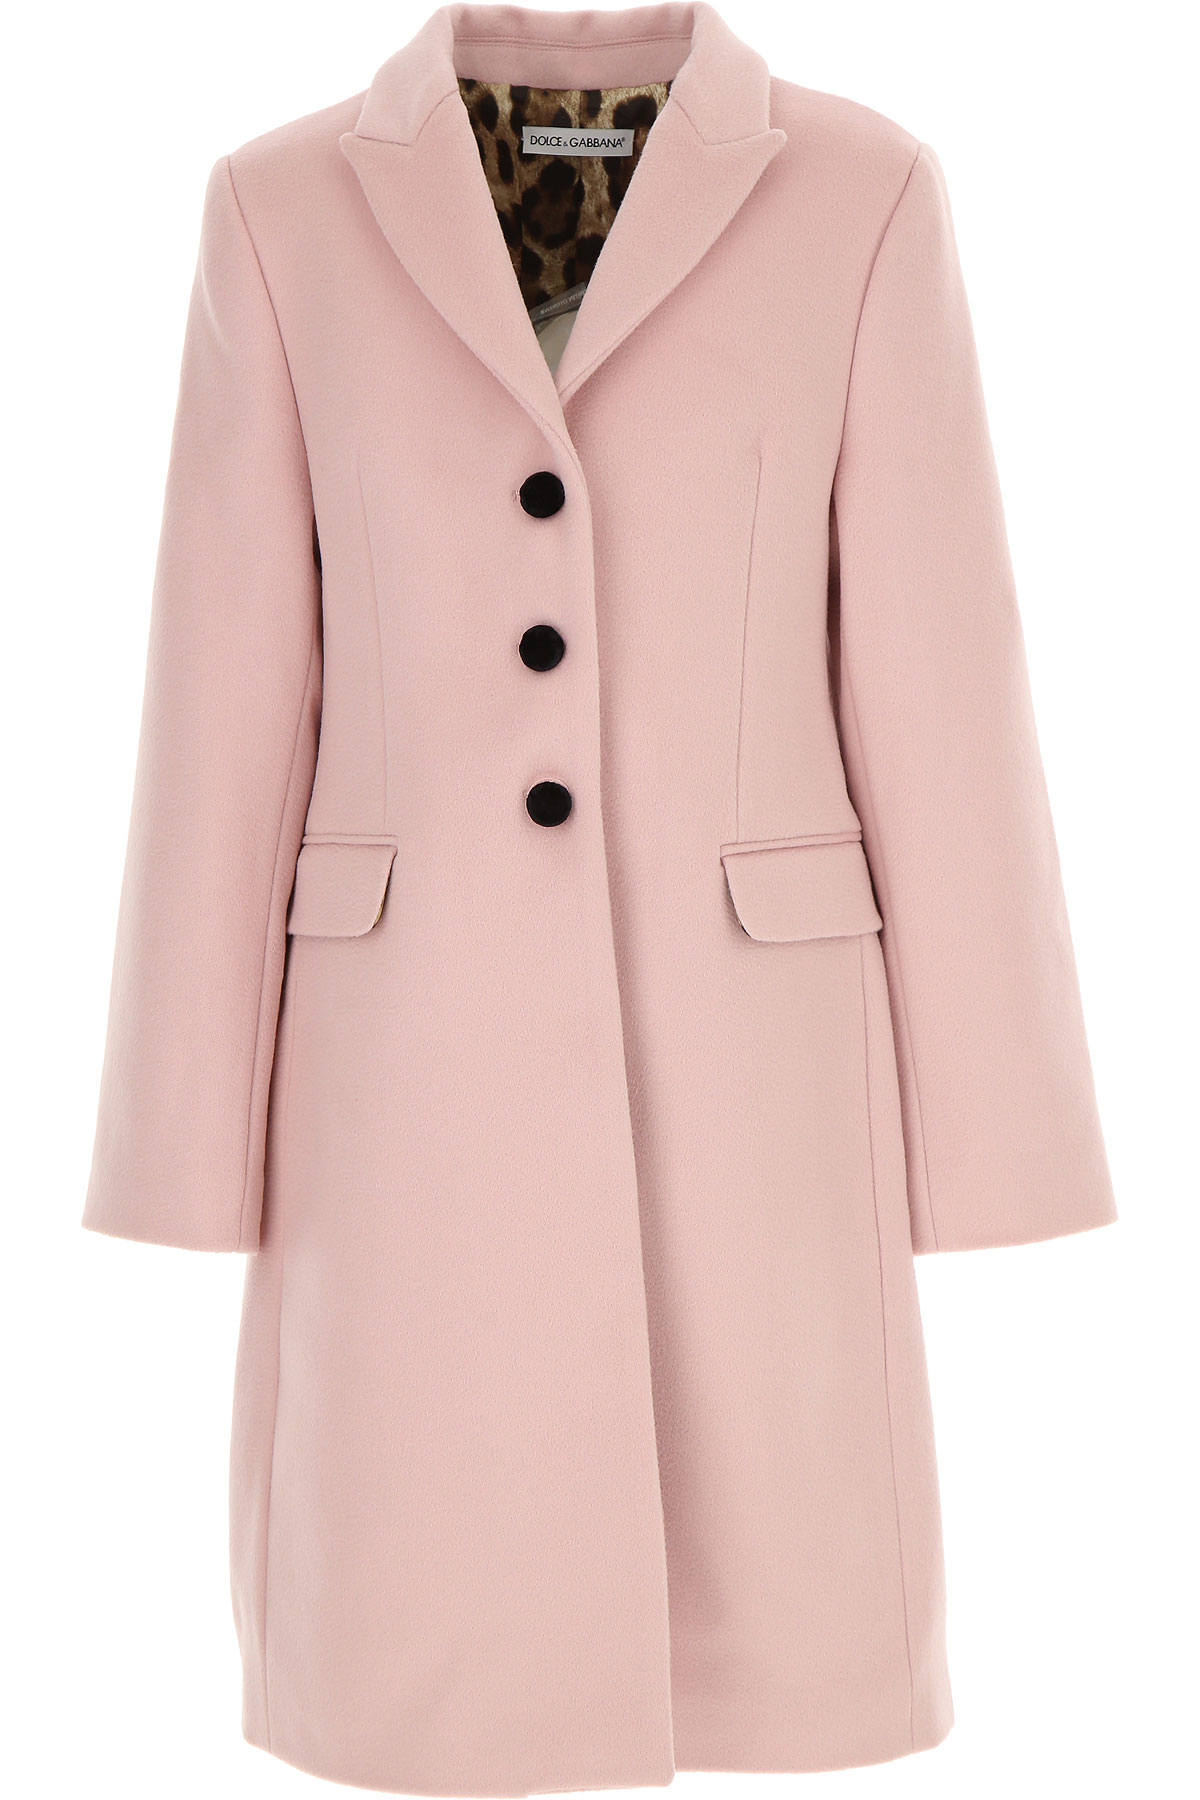 Dolce Gabbana пальто розовое. Пальто розовое Дольче Габбана. Пальто Дольче для девочки. Розовое пальто малышу.